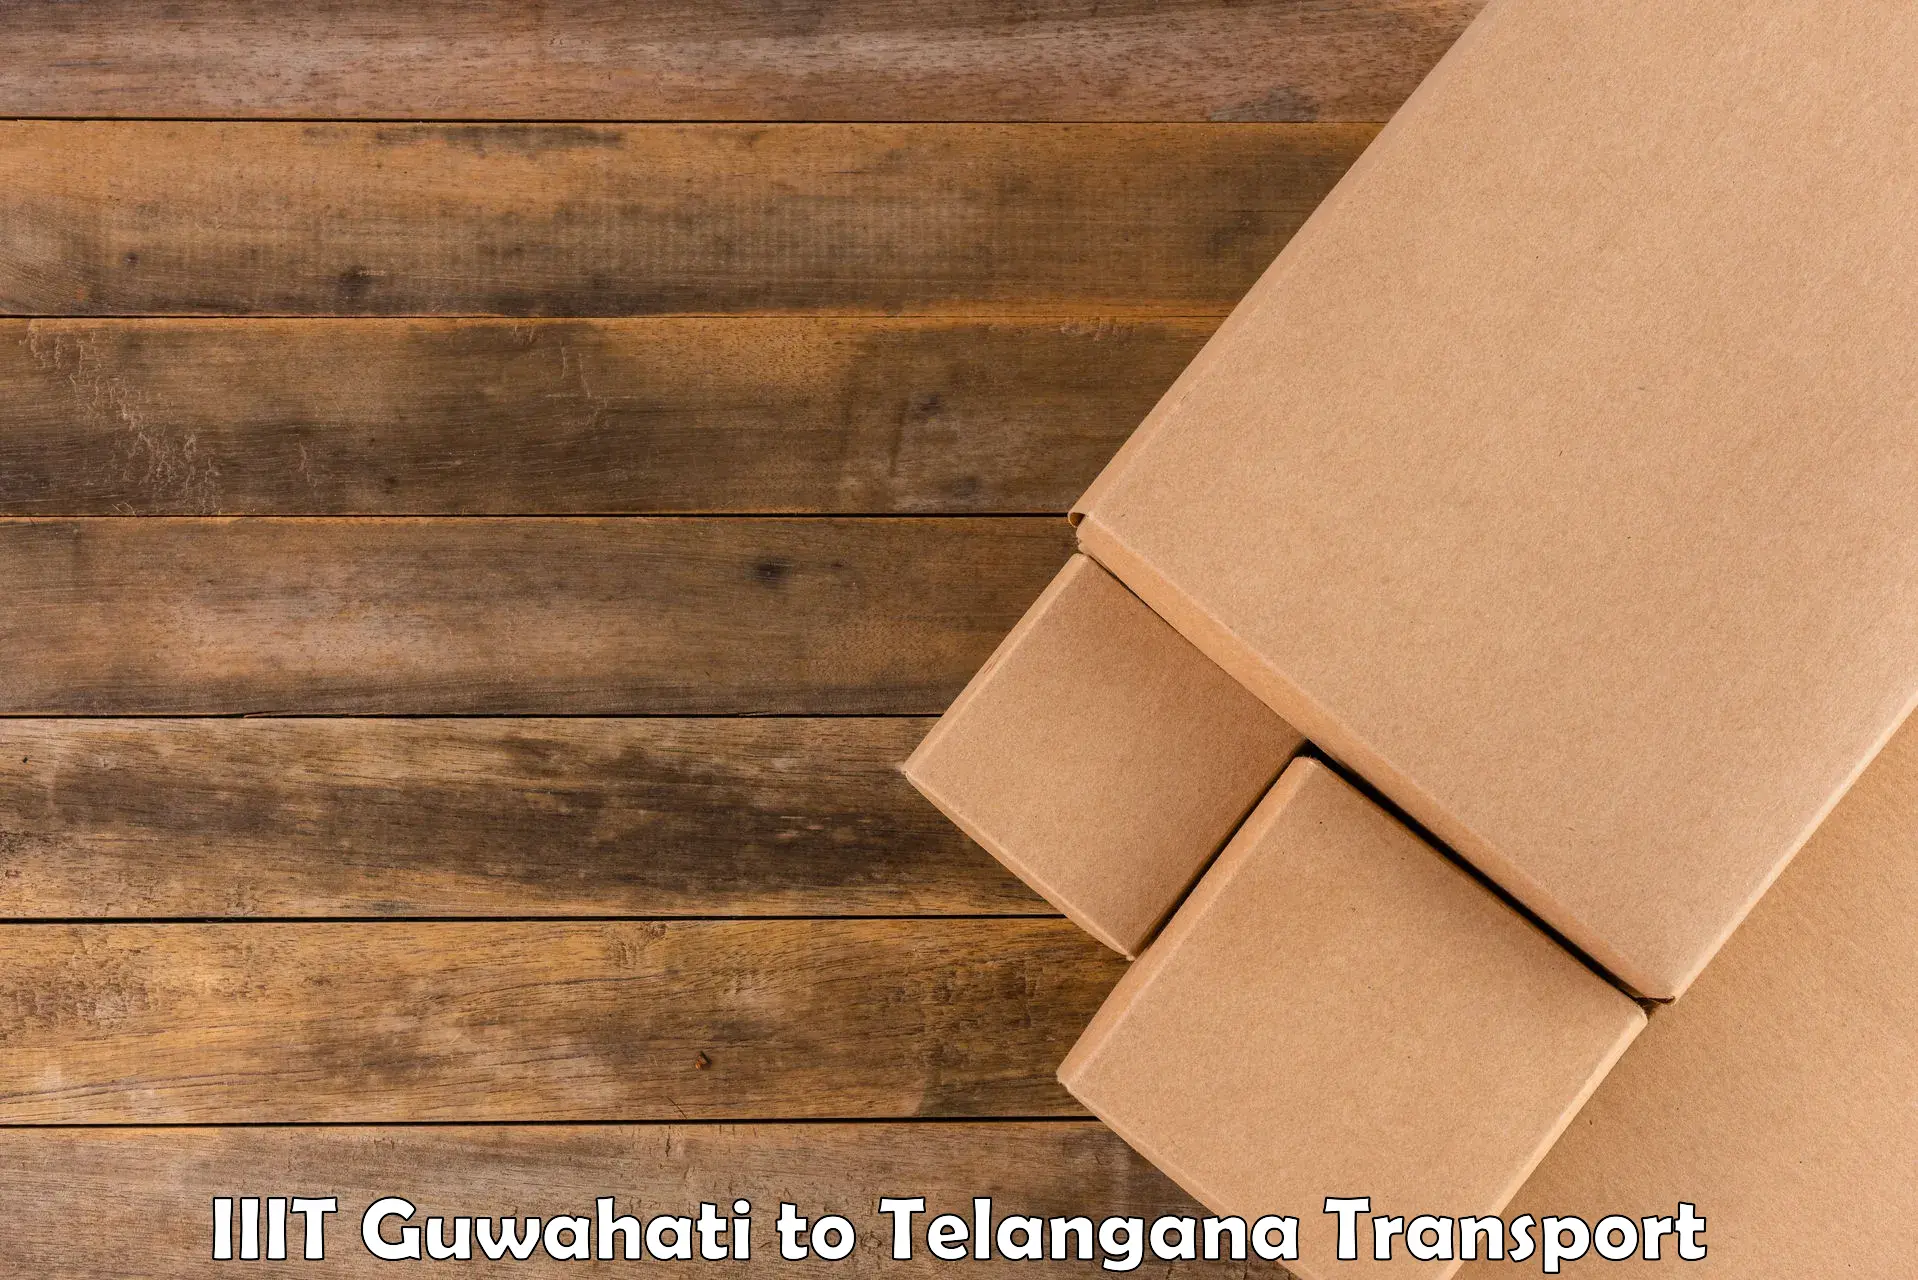 Delivery service IIIT Guwahati to Telangana